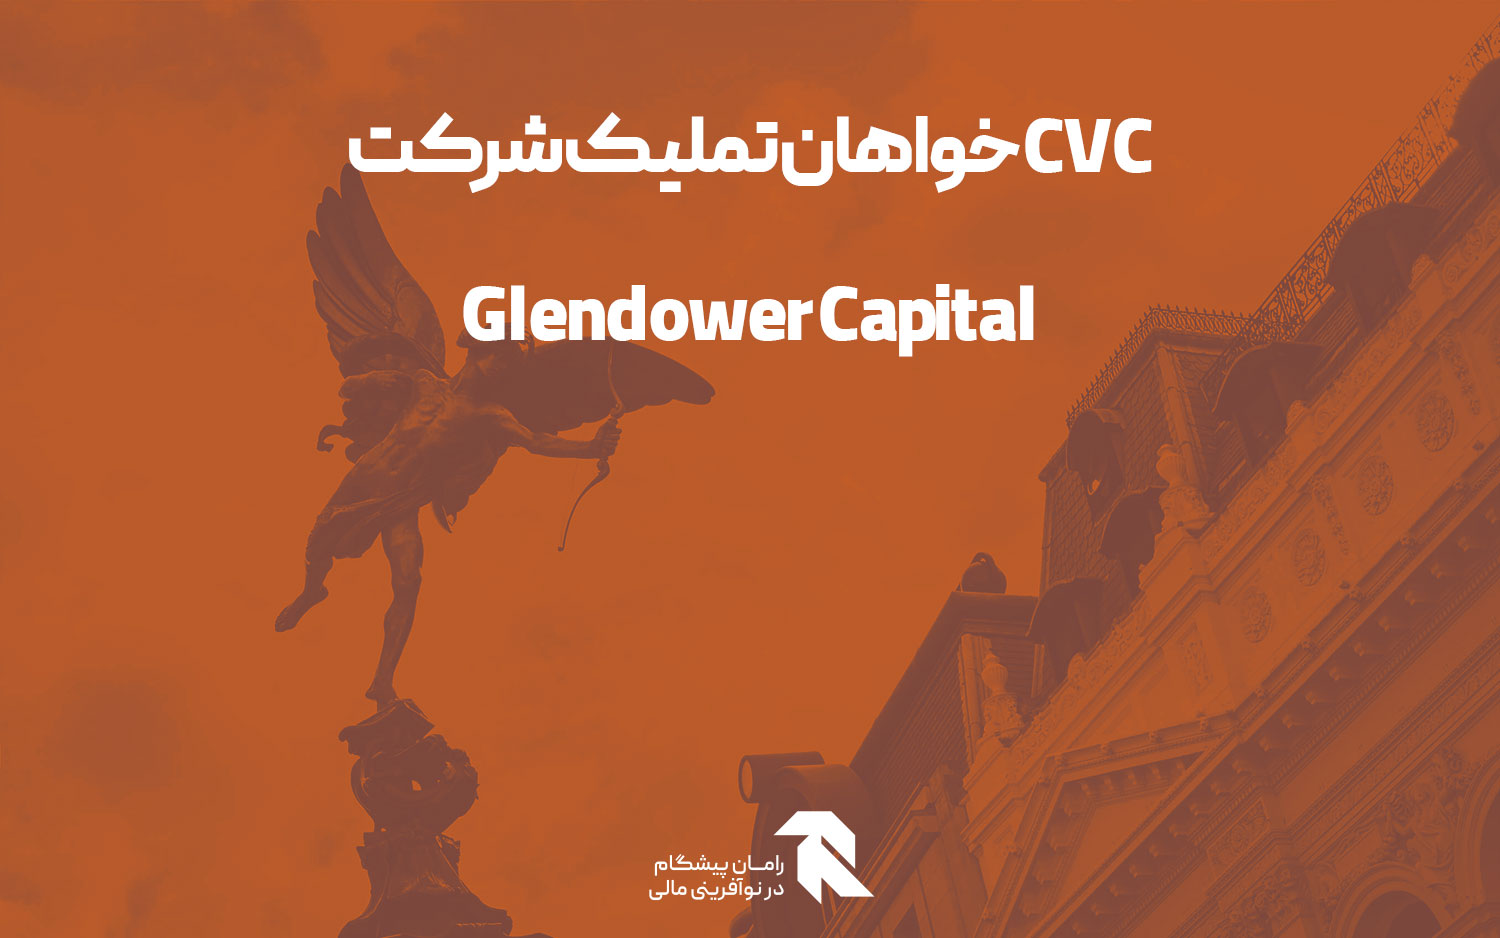 CVC خواهان تملیک شرکت Glendower Capital